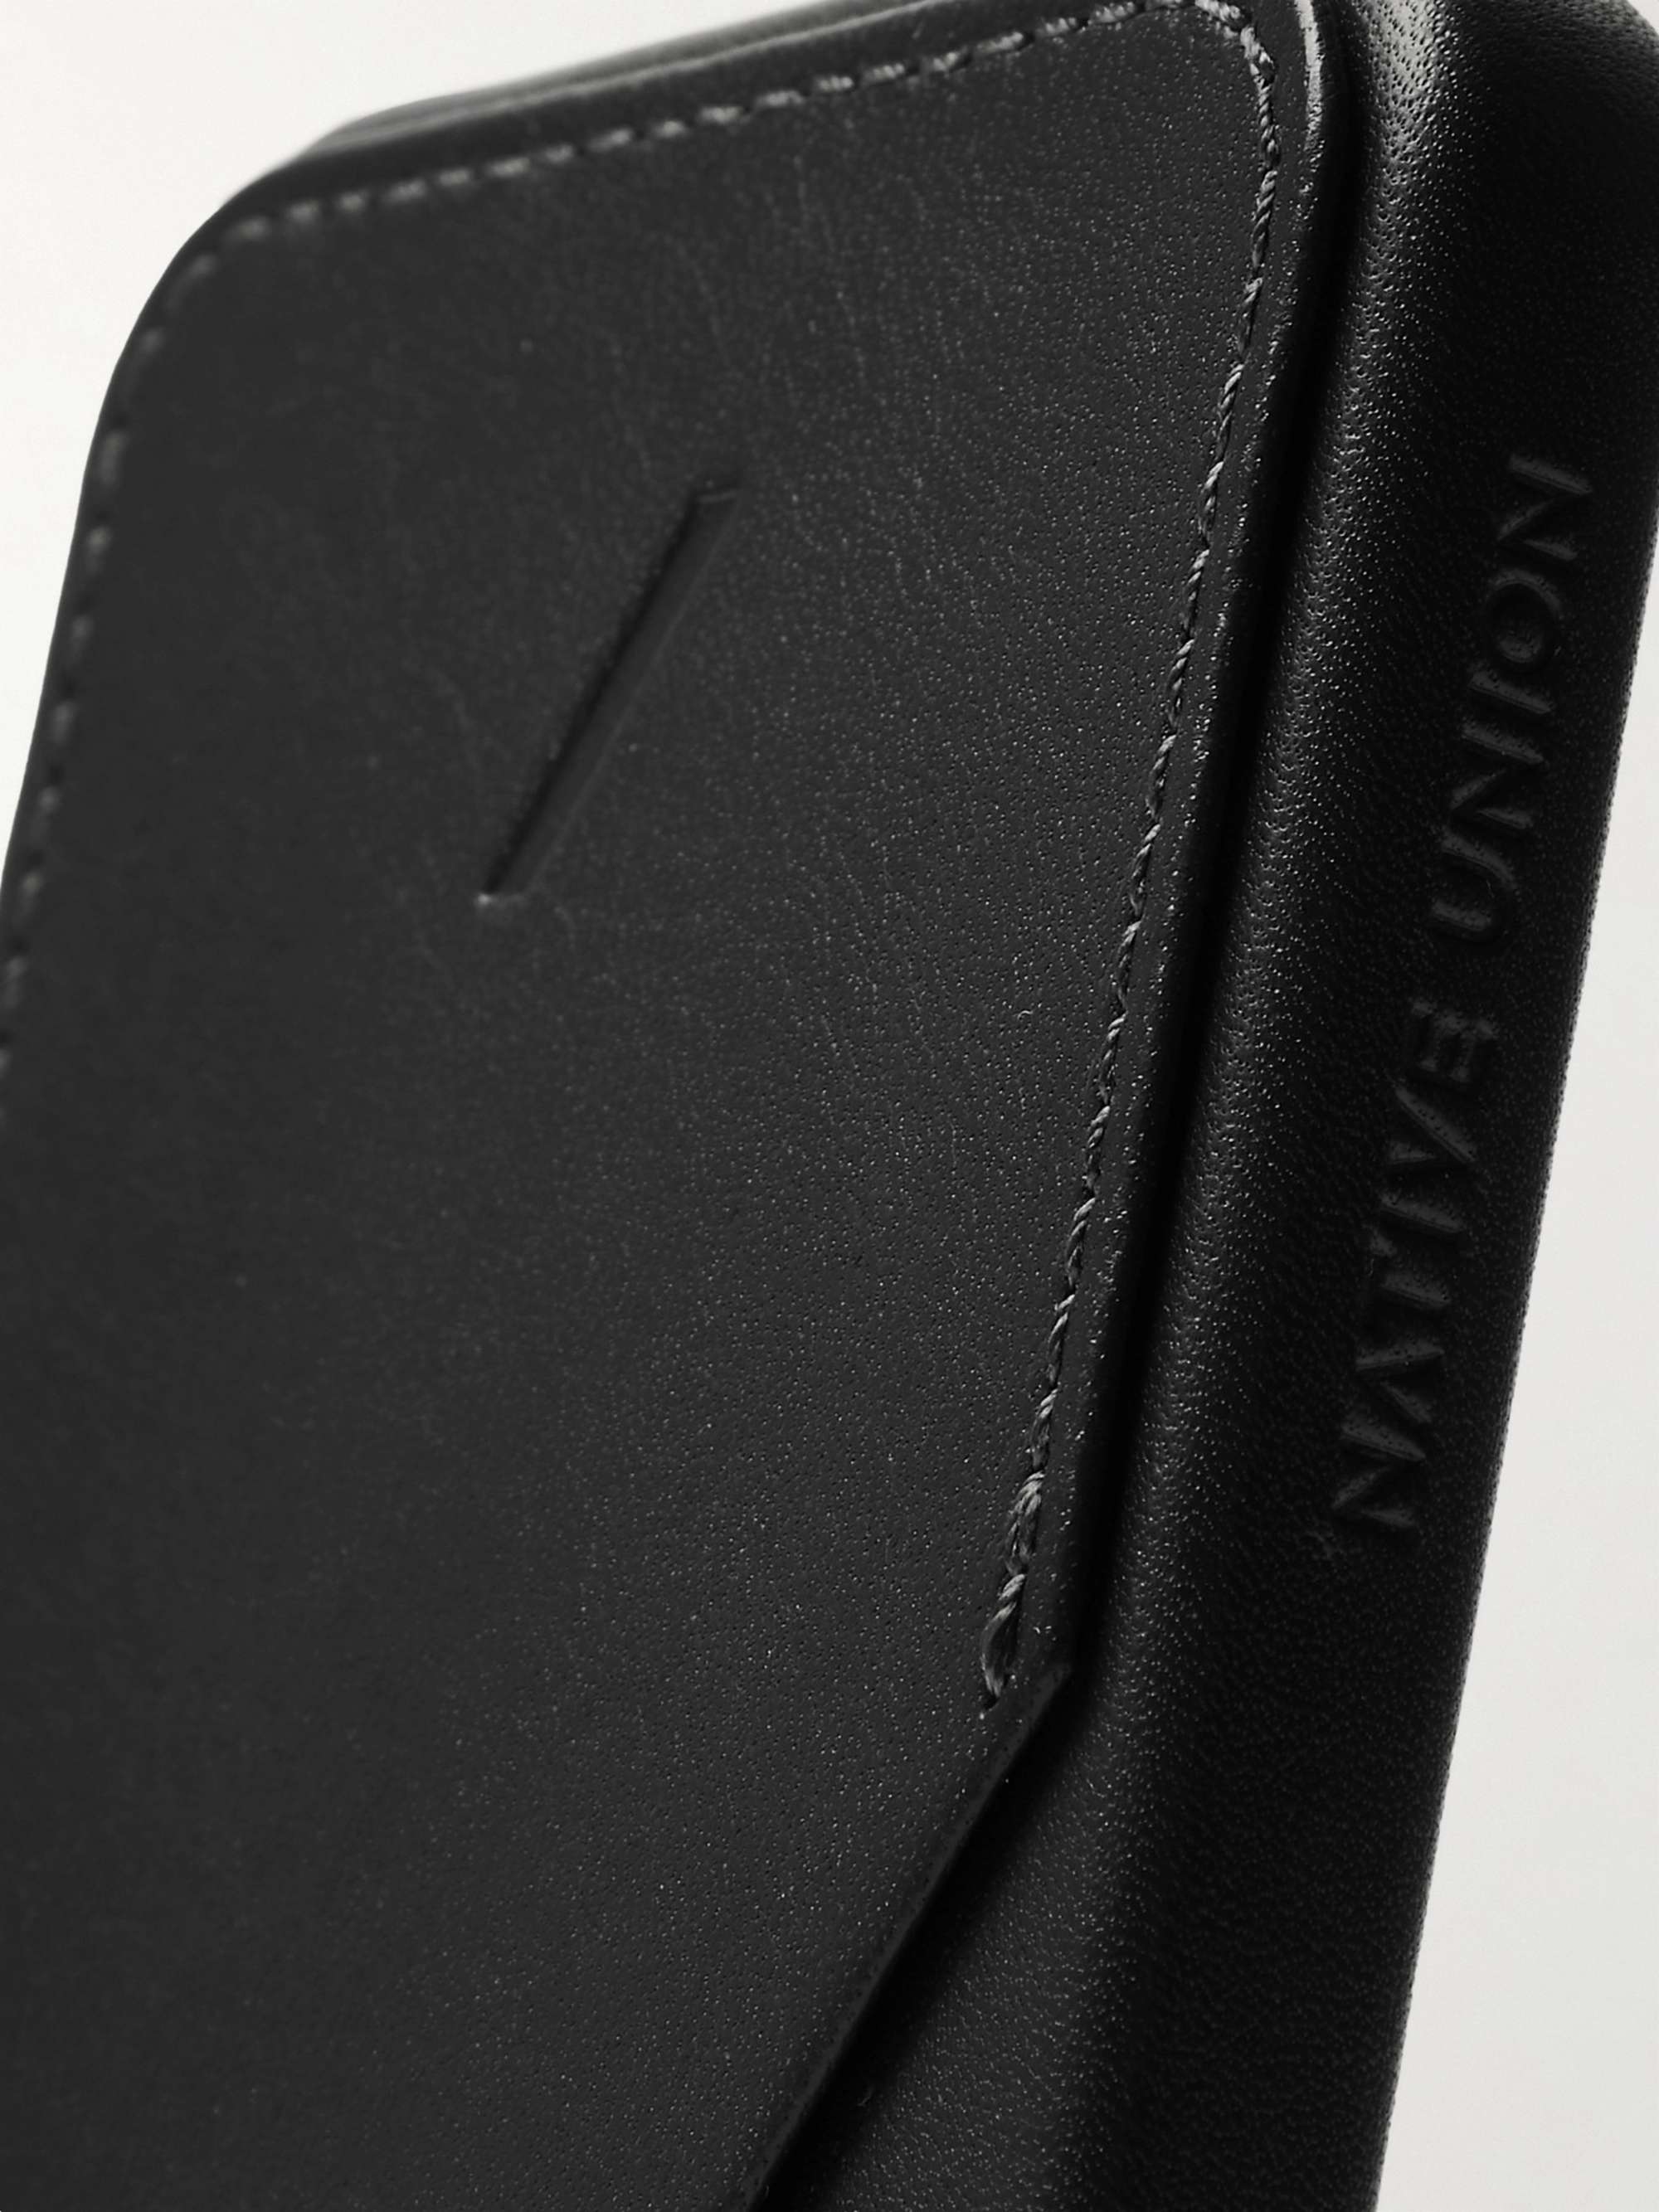 NATIVE UNION Clic Card Leather iPhone 12 Pro Case